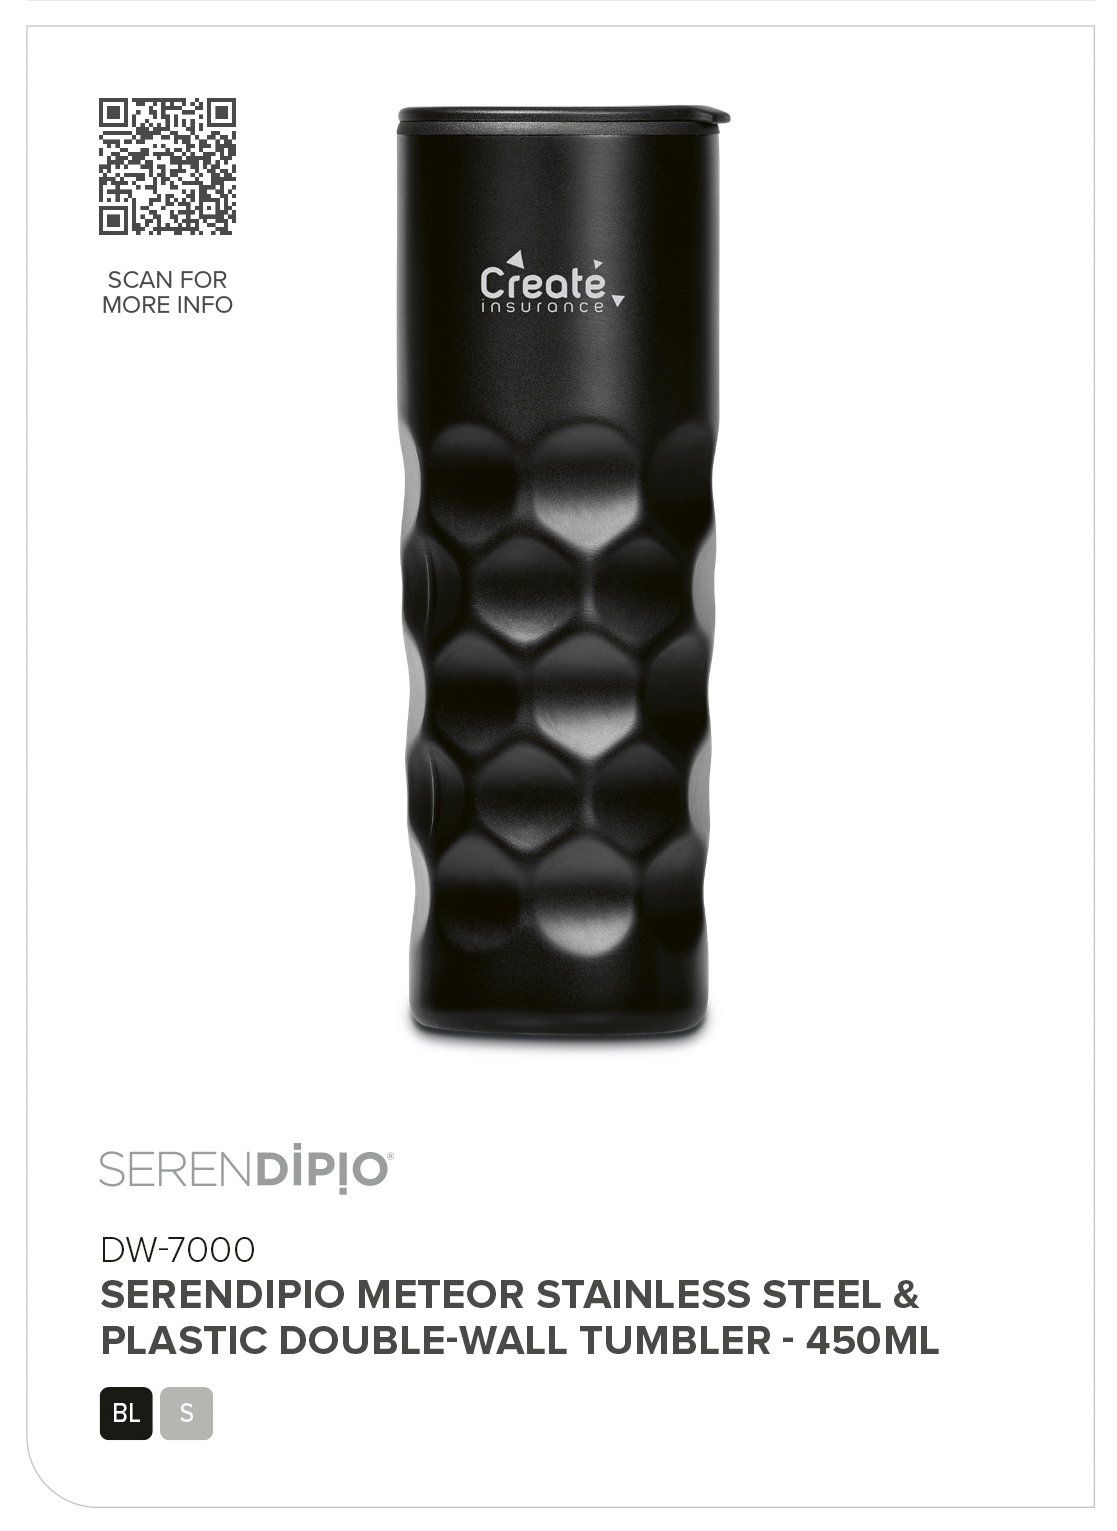 Serendipio Meteor Stainless Steel & Plastic Double-Wall Tumbler - 450ml